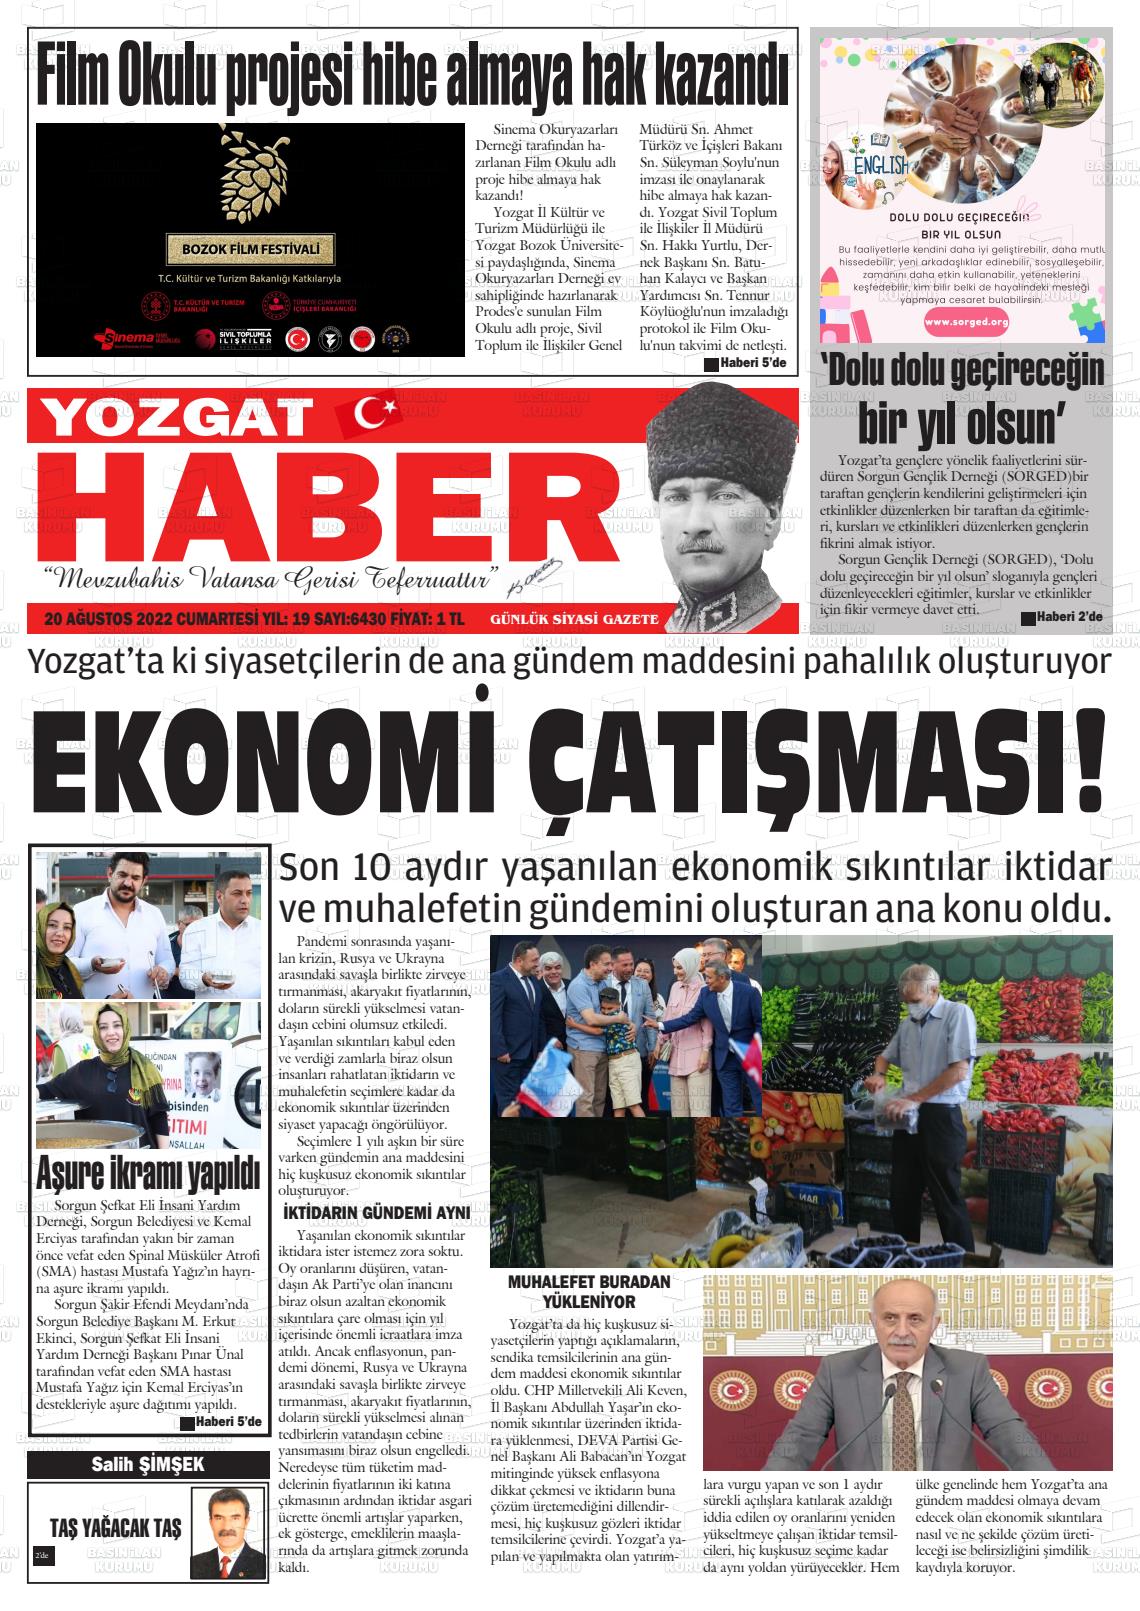 20 Ağustos 2022 Yozgat Haber Gazete Manşeti